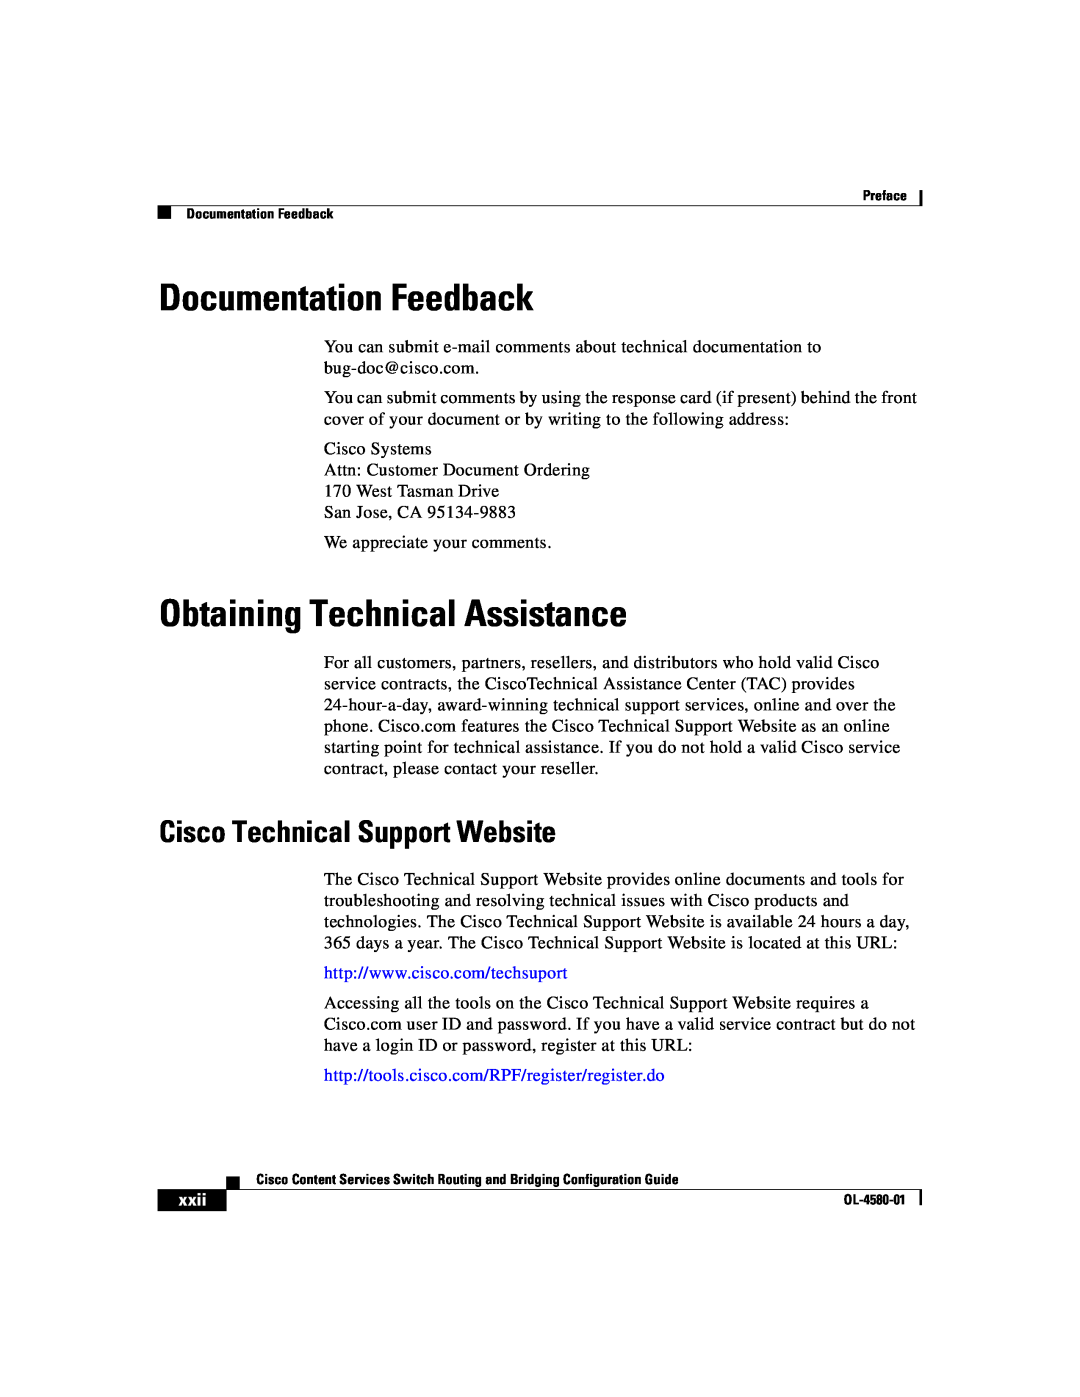 Cisco Systems OL-4580-01 Documentation Feedback, Obtaining Technical Assistance, Cisco Technical Support Website, xxii 